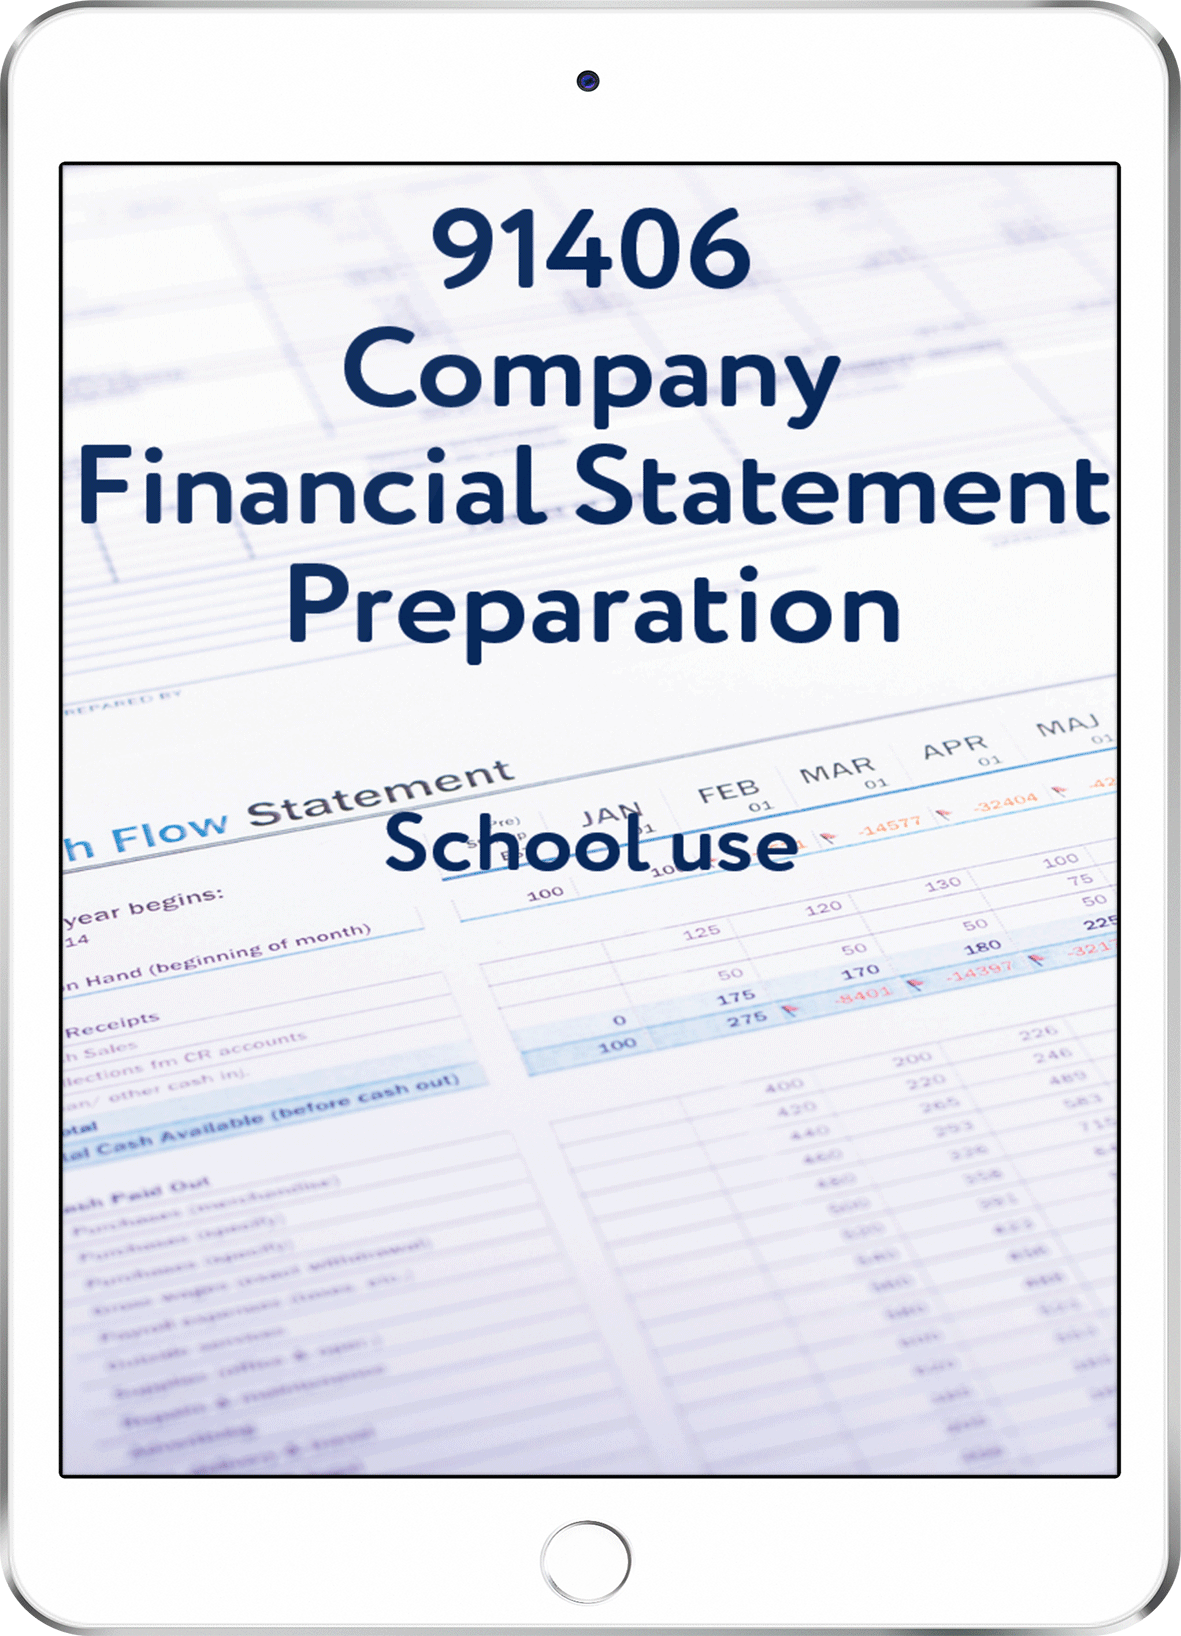 91406 Company Financial Statement Preparation - School Use